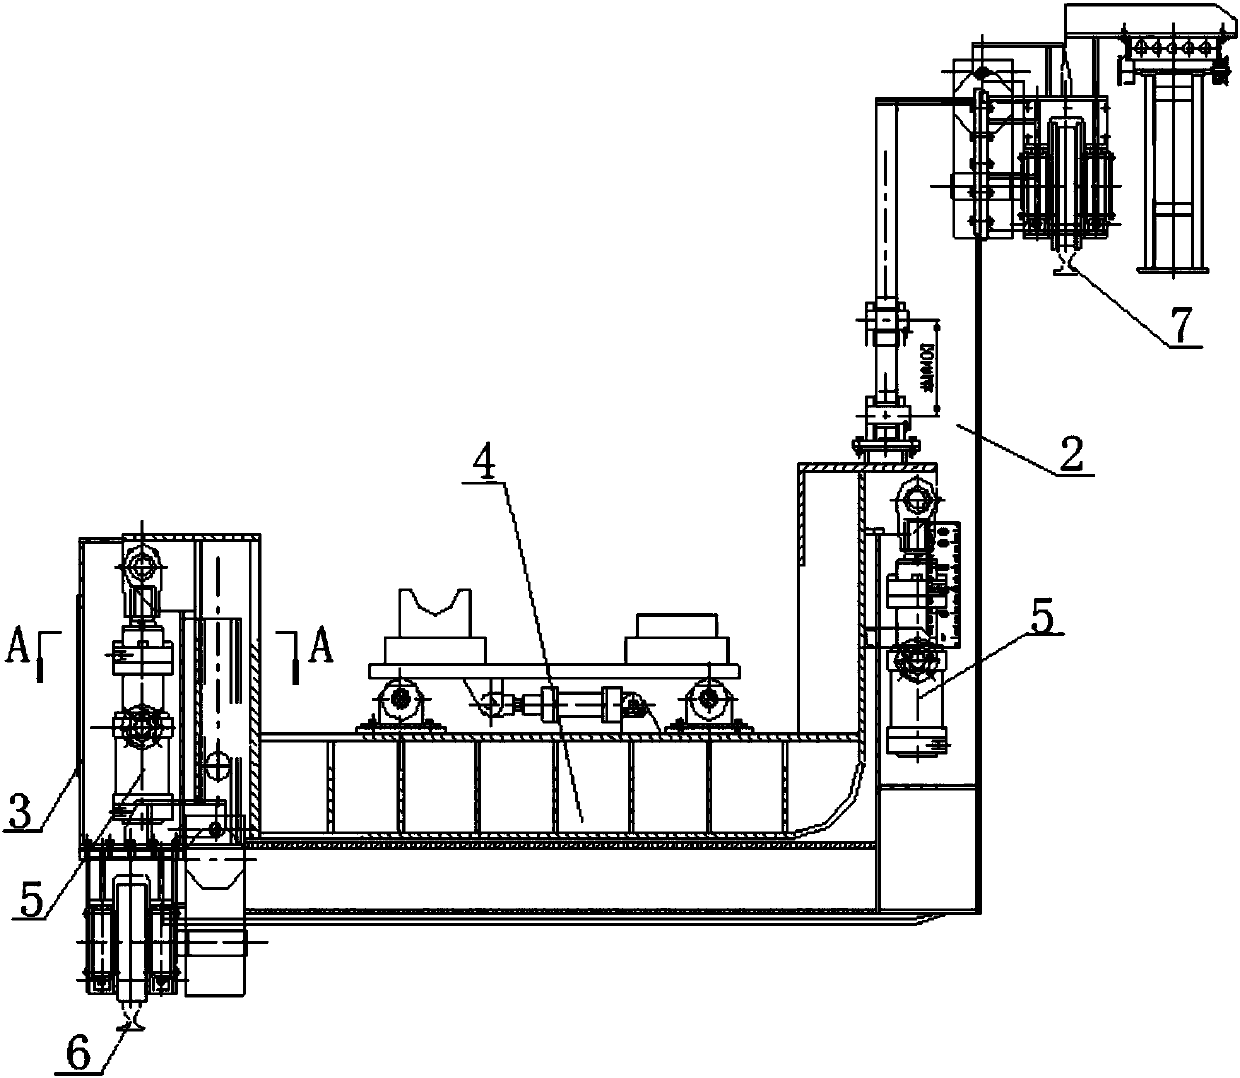 Intermediate tank truck of continuous casting machine